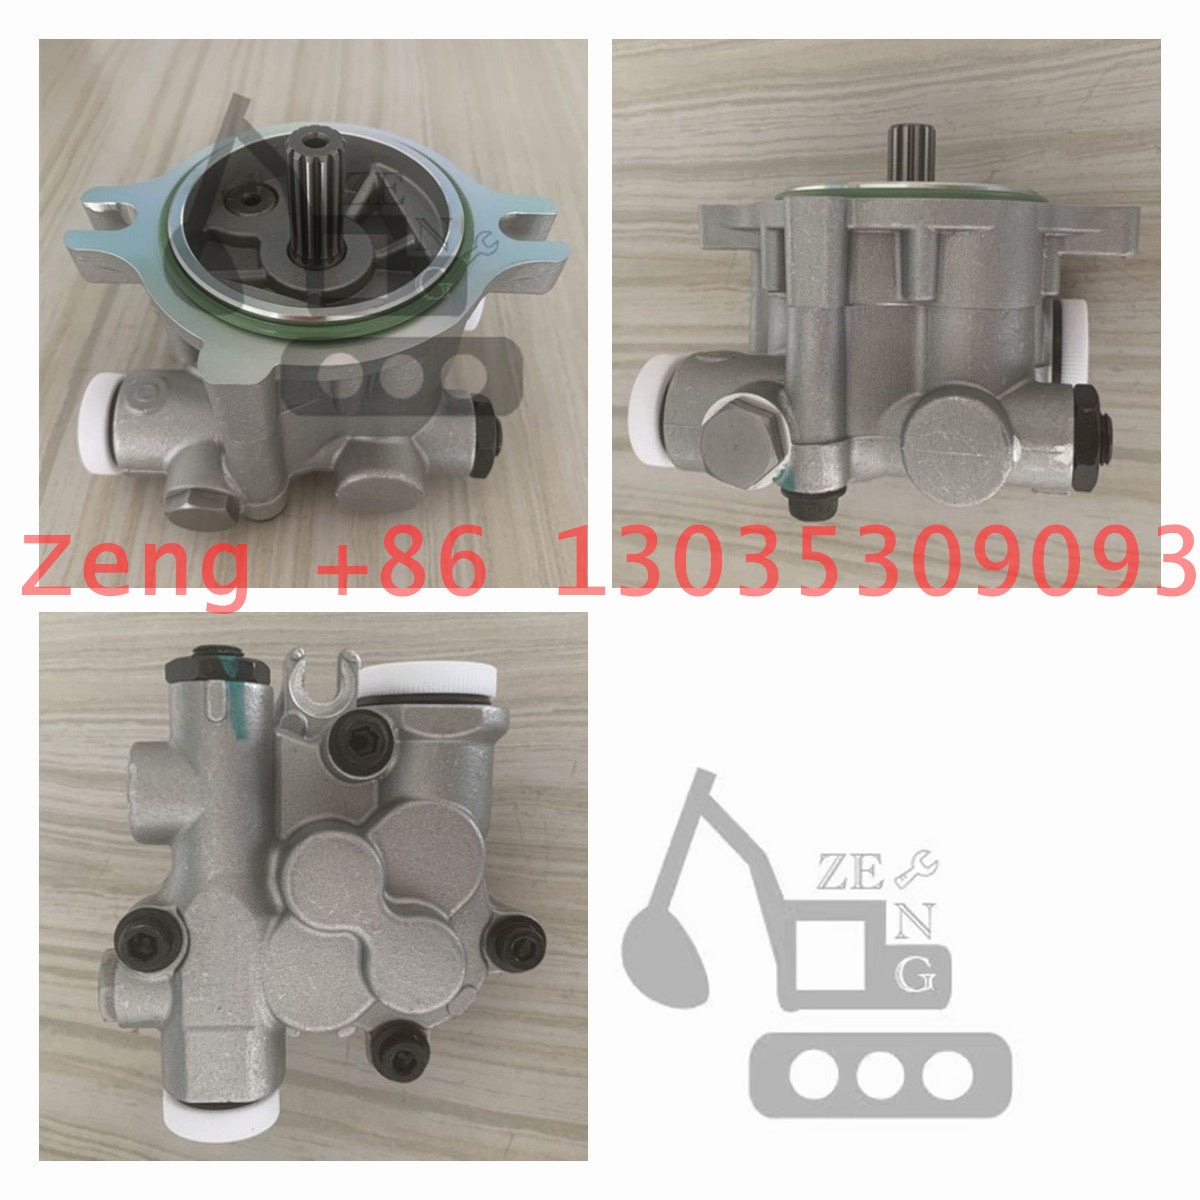 K3V112 hydraulic pump parts – 13035309093